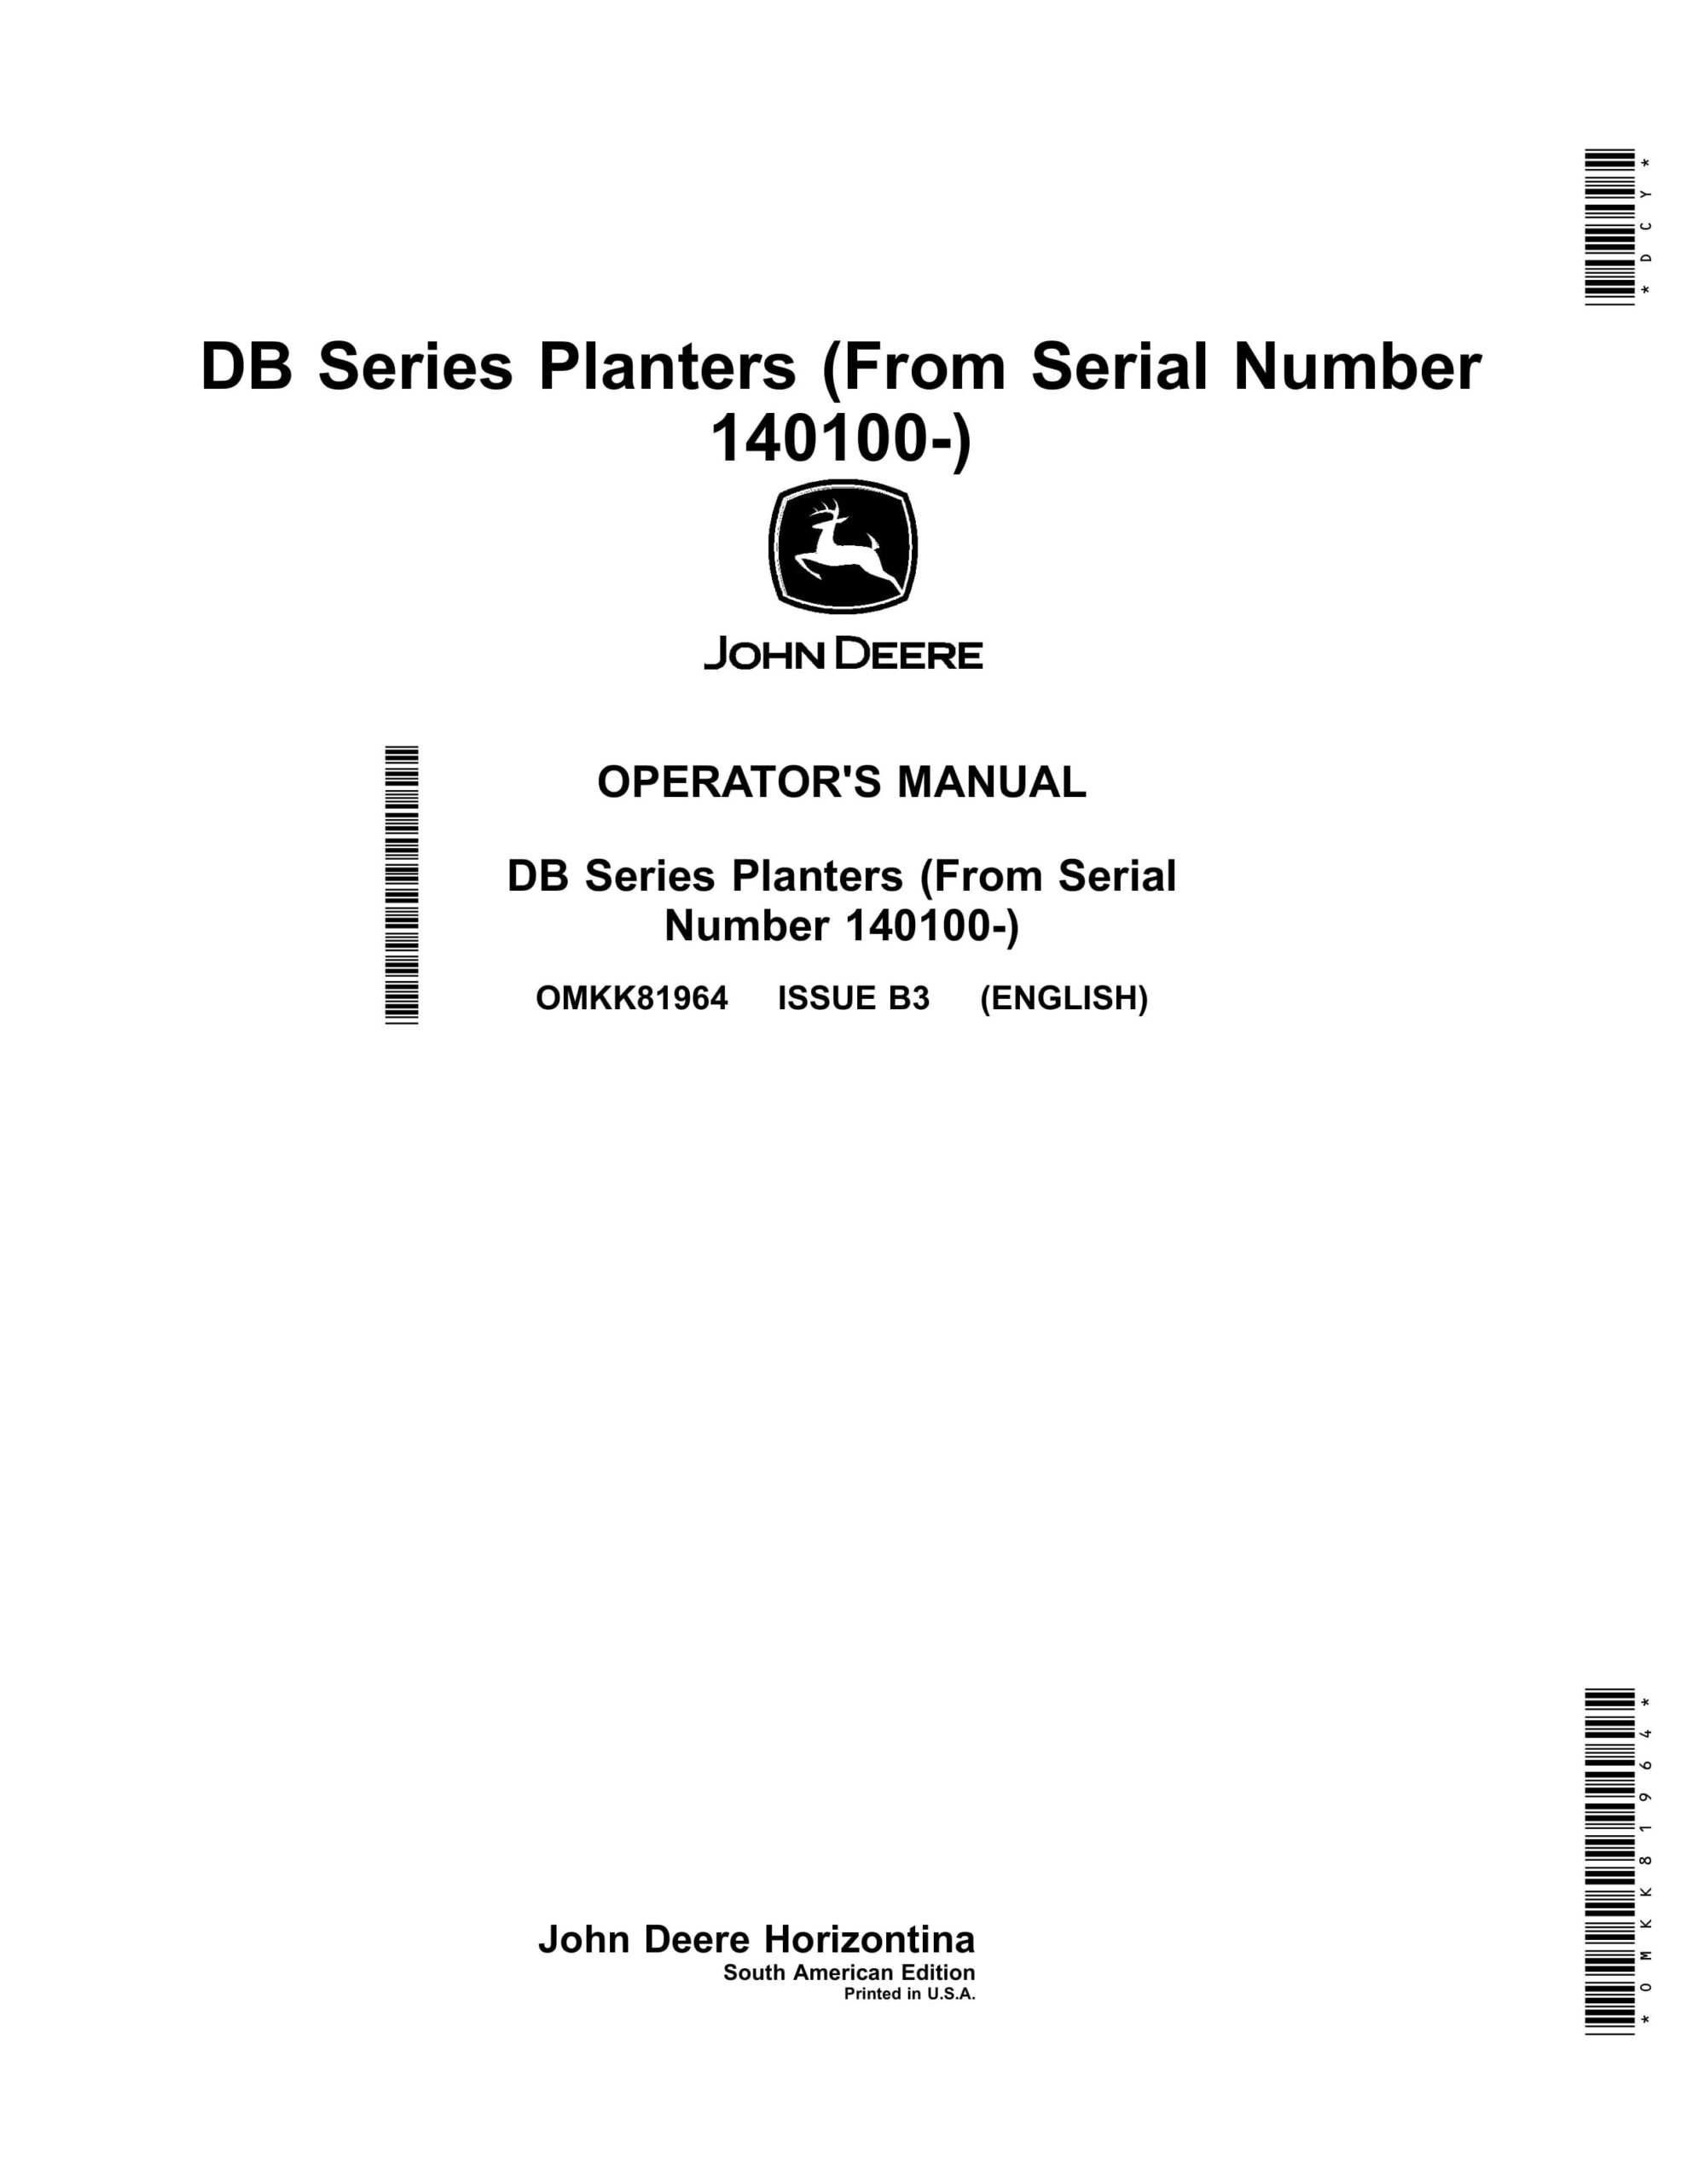 John Deere DB Series Planter Operator Manual OMKK81964-1